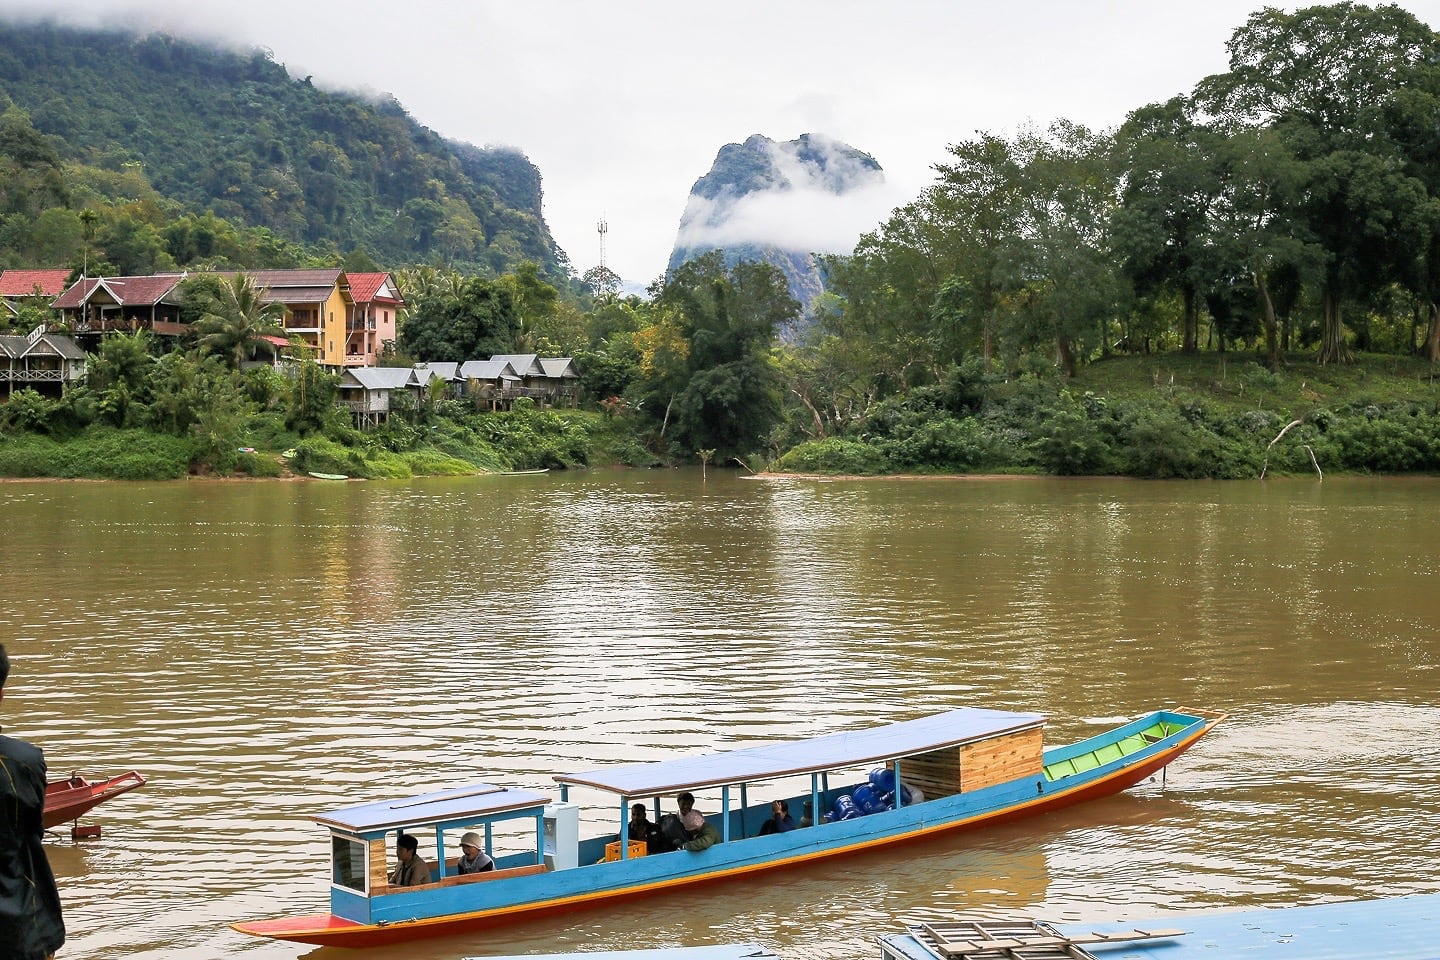 ou river boat trip start point in nong khiaw